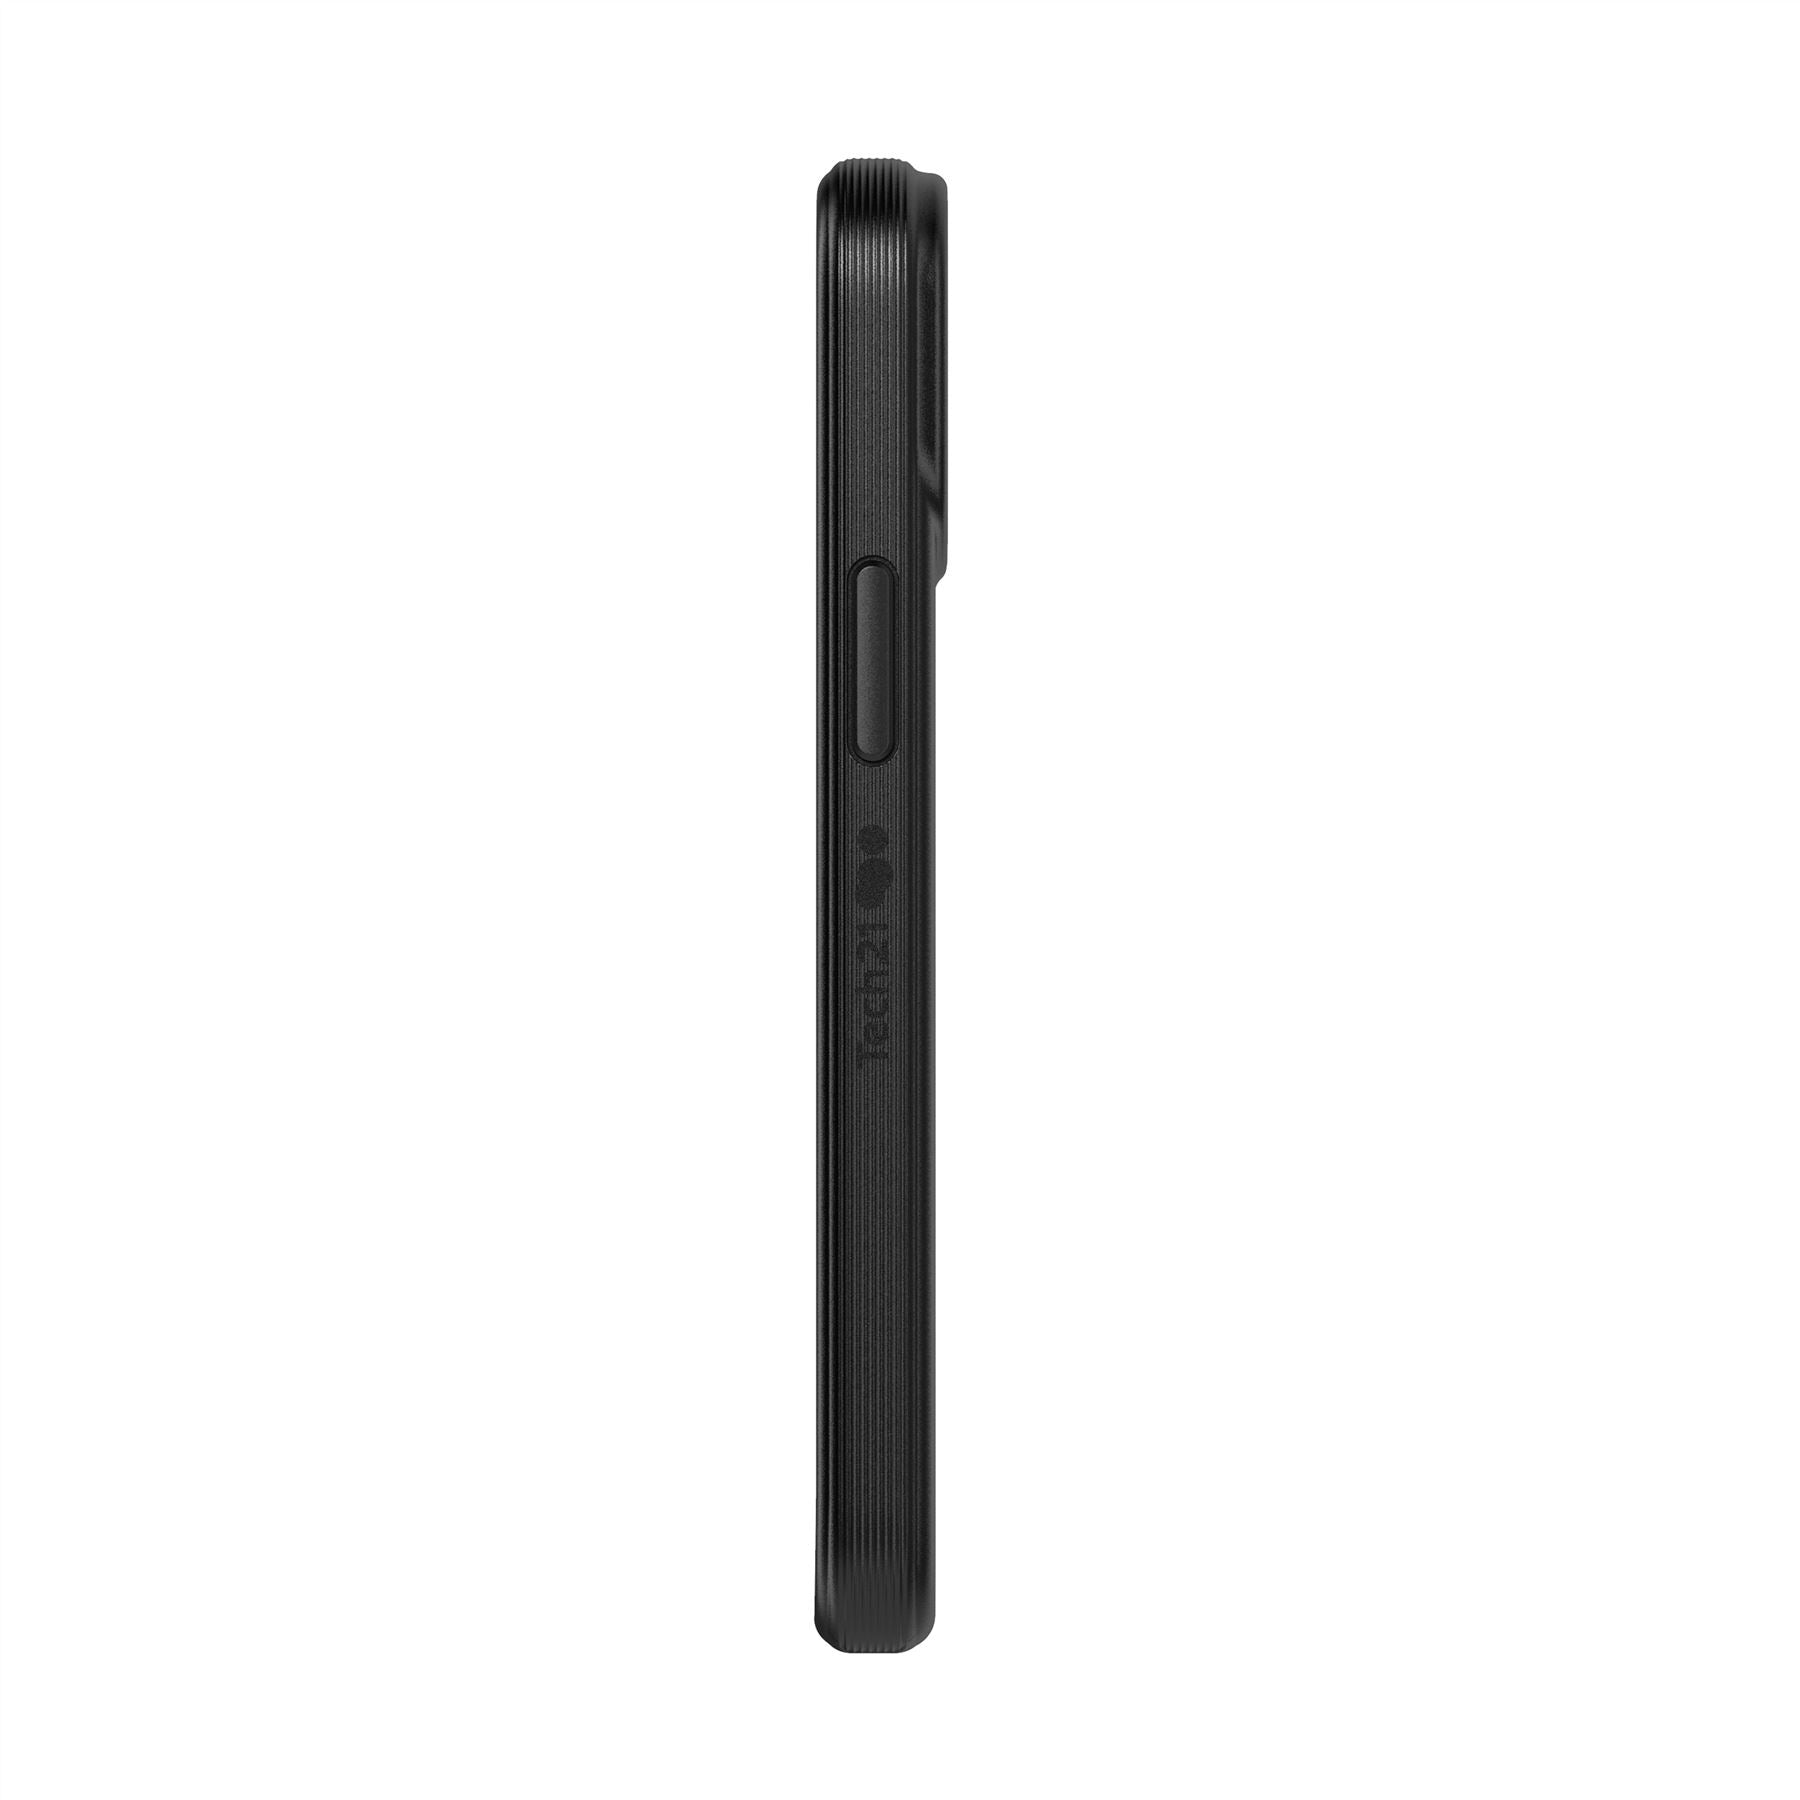 Evo Lite - Apple iPhone 13 mini Case - Black